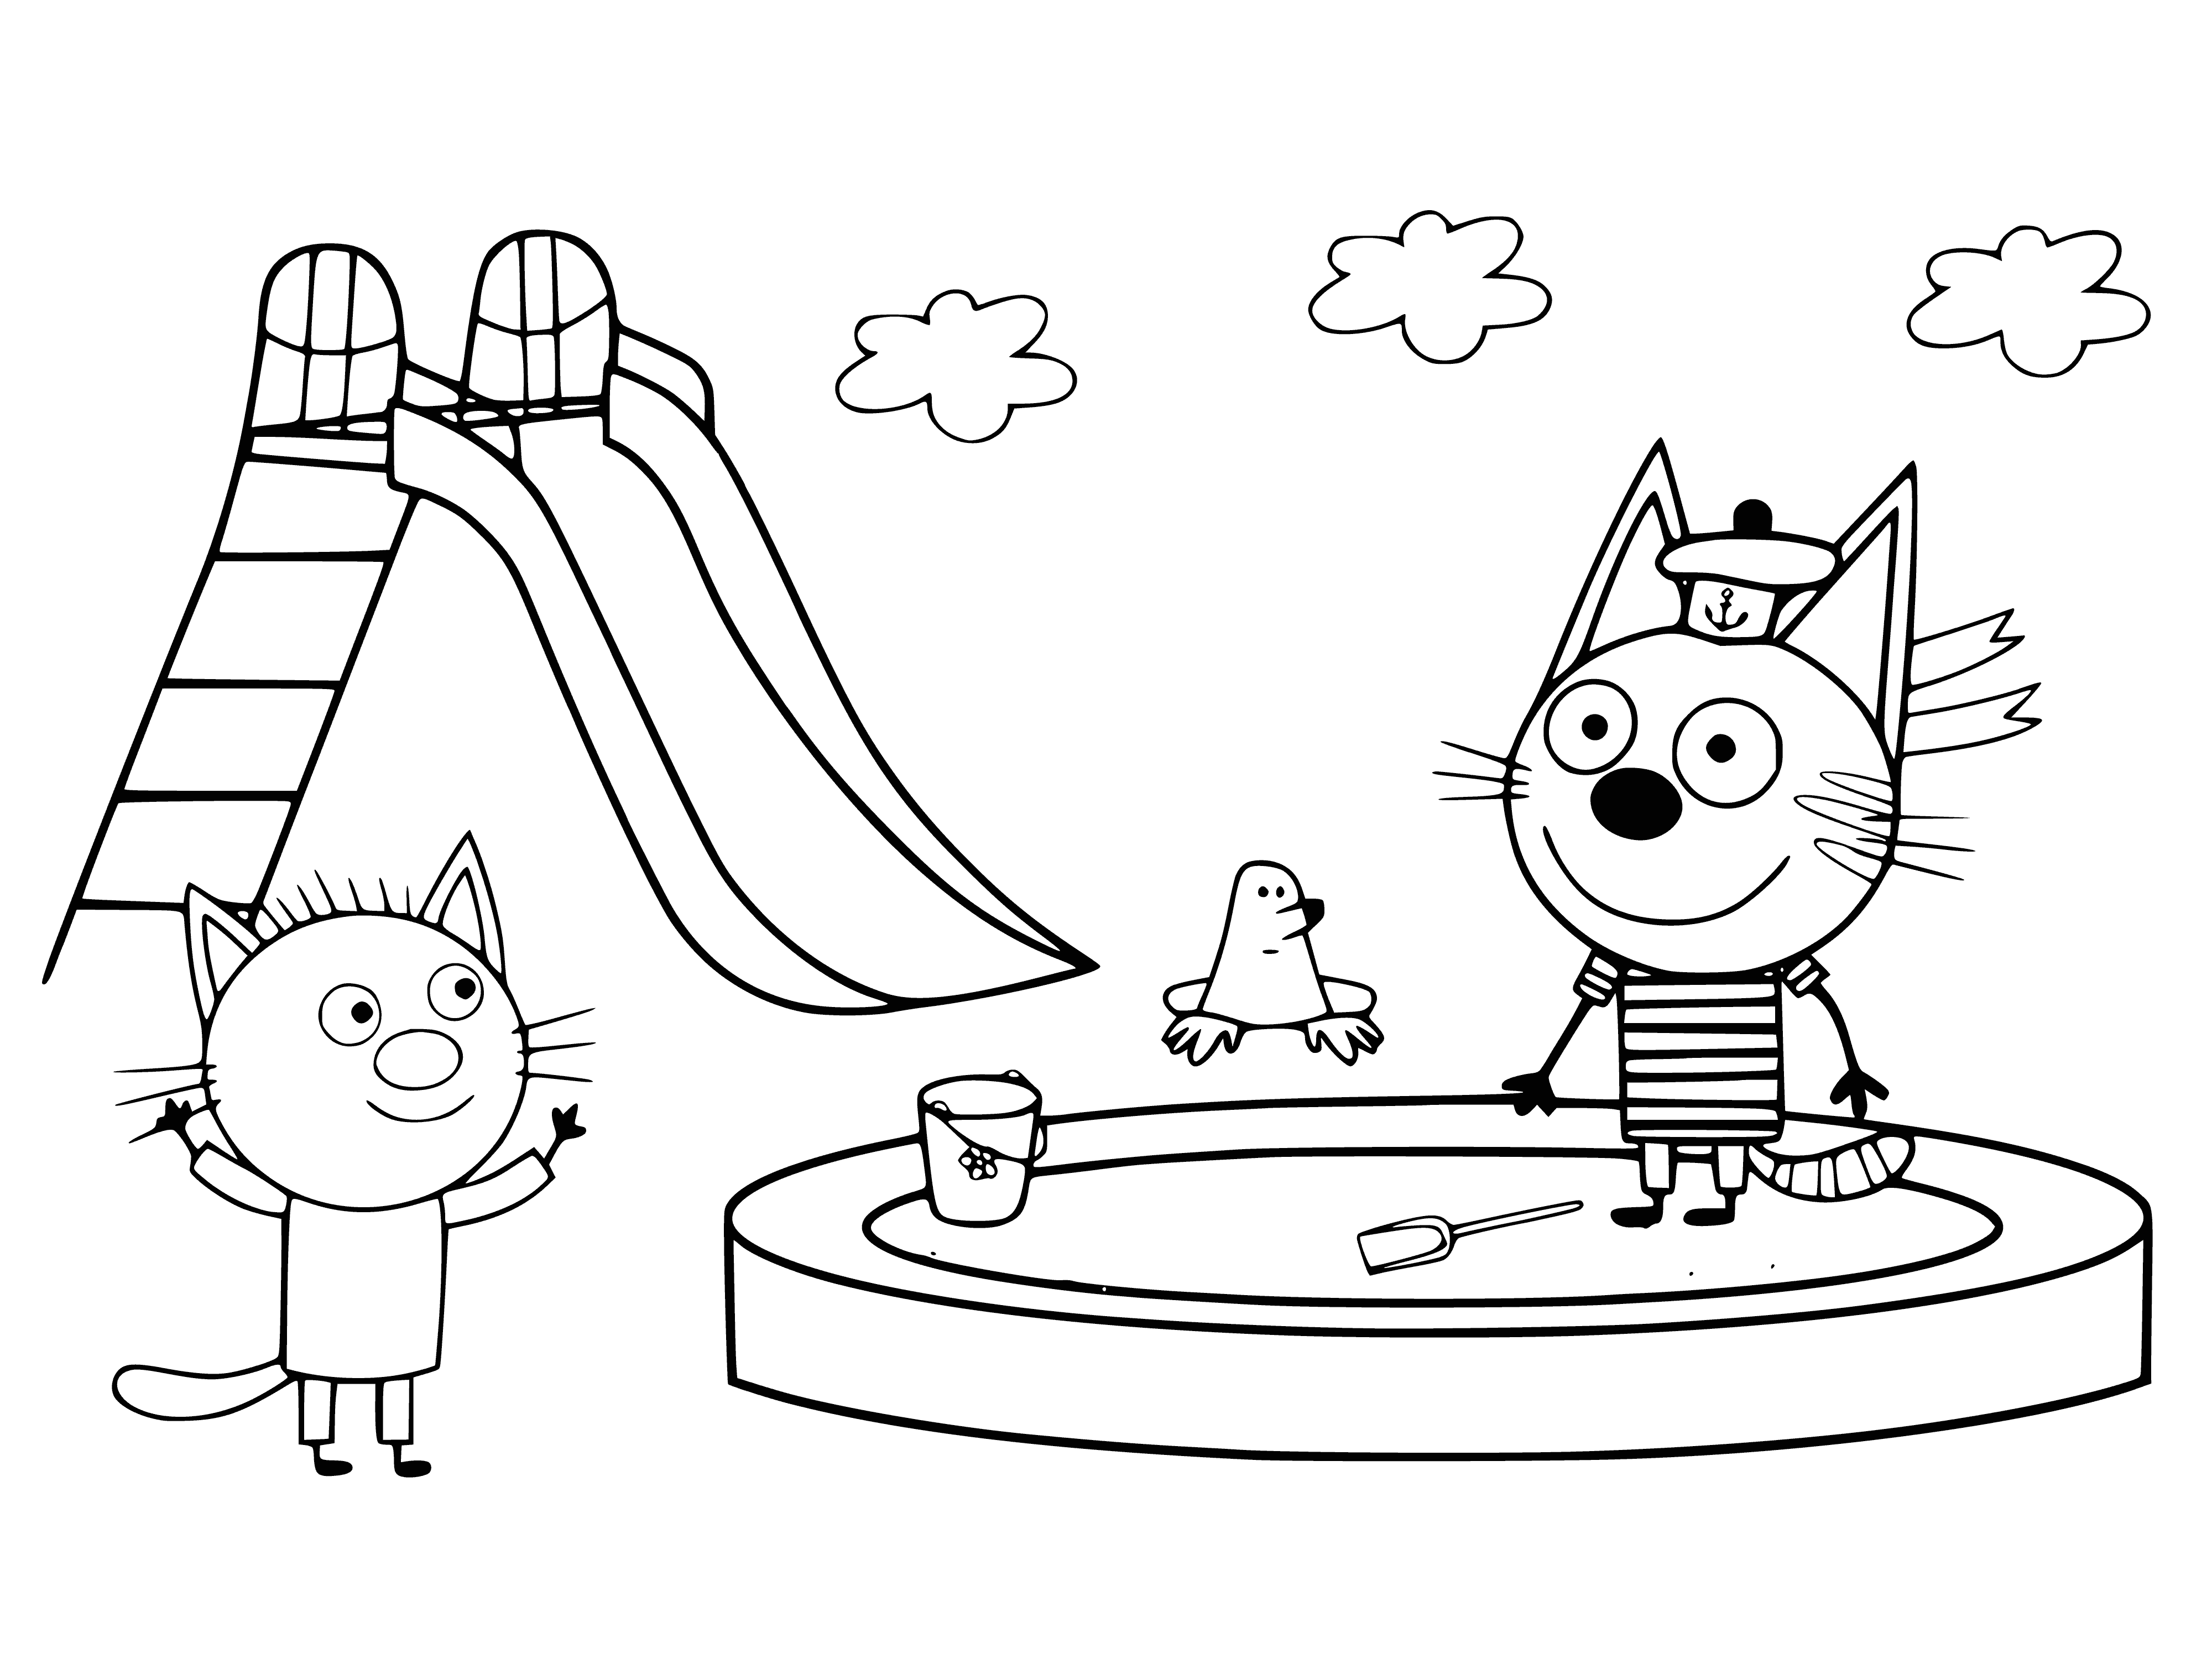 coloring page: Children laugh, swings creak as cats Sazhik (blue collar) & Korzhik (red collar) survey their kingdom atop the jungle gym.